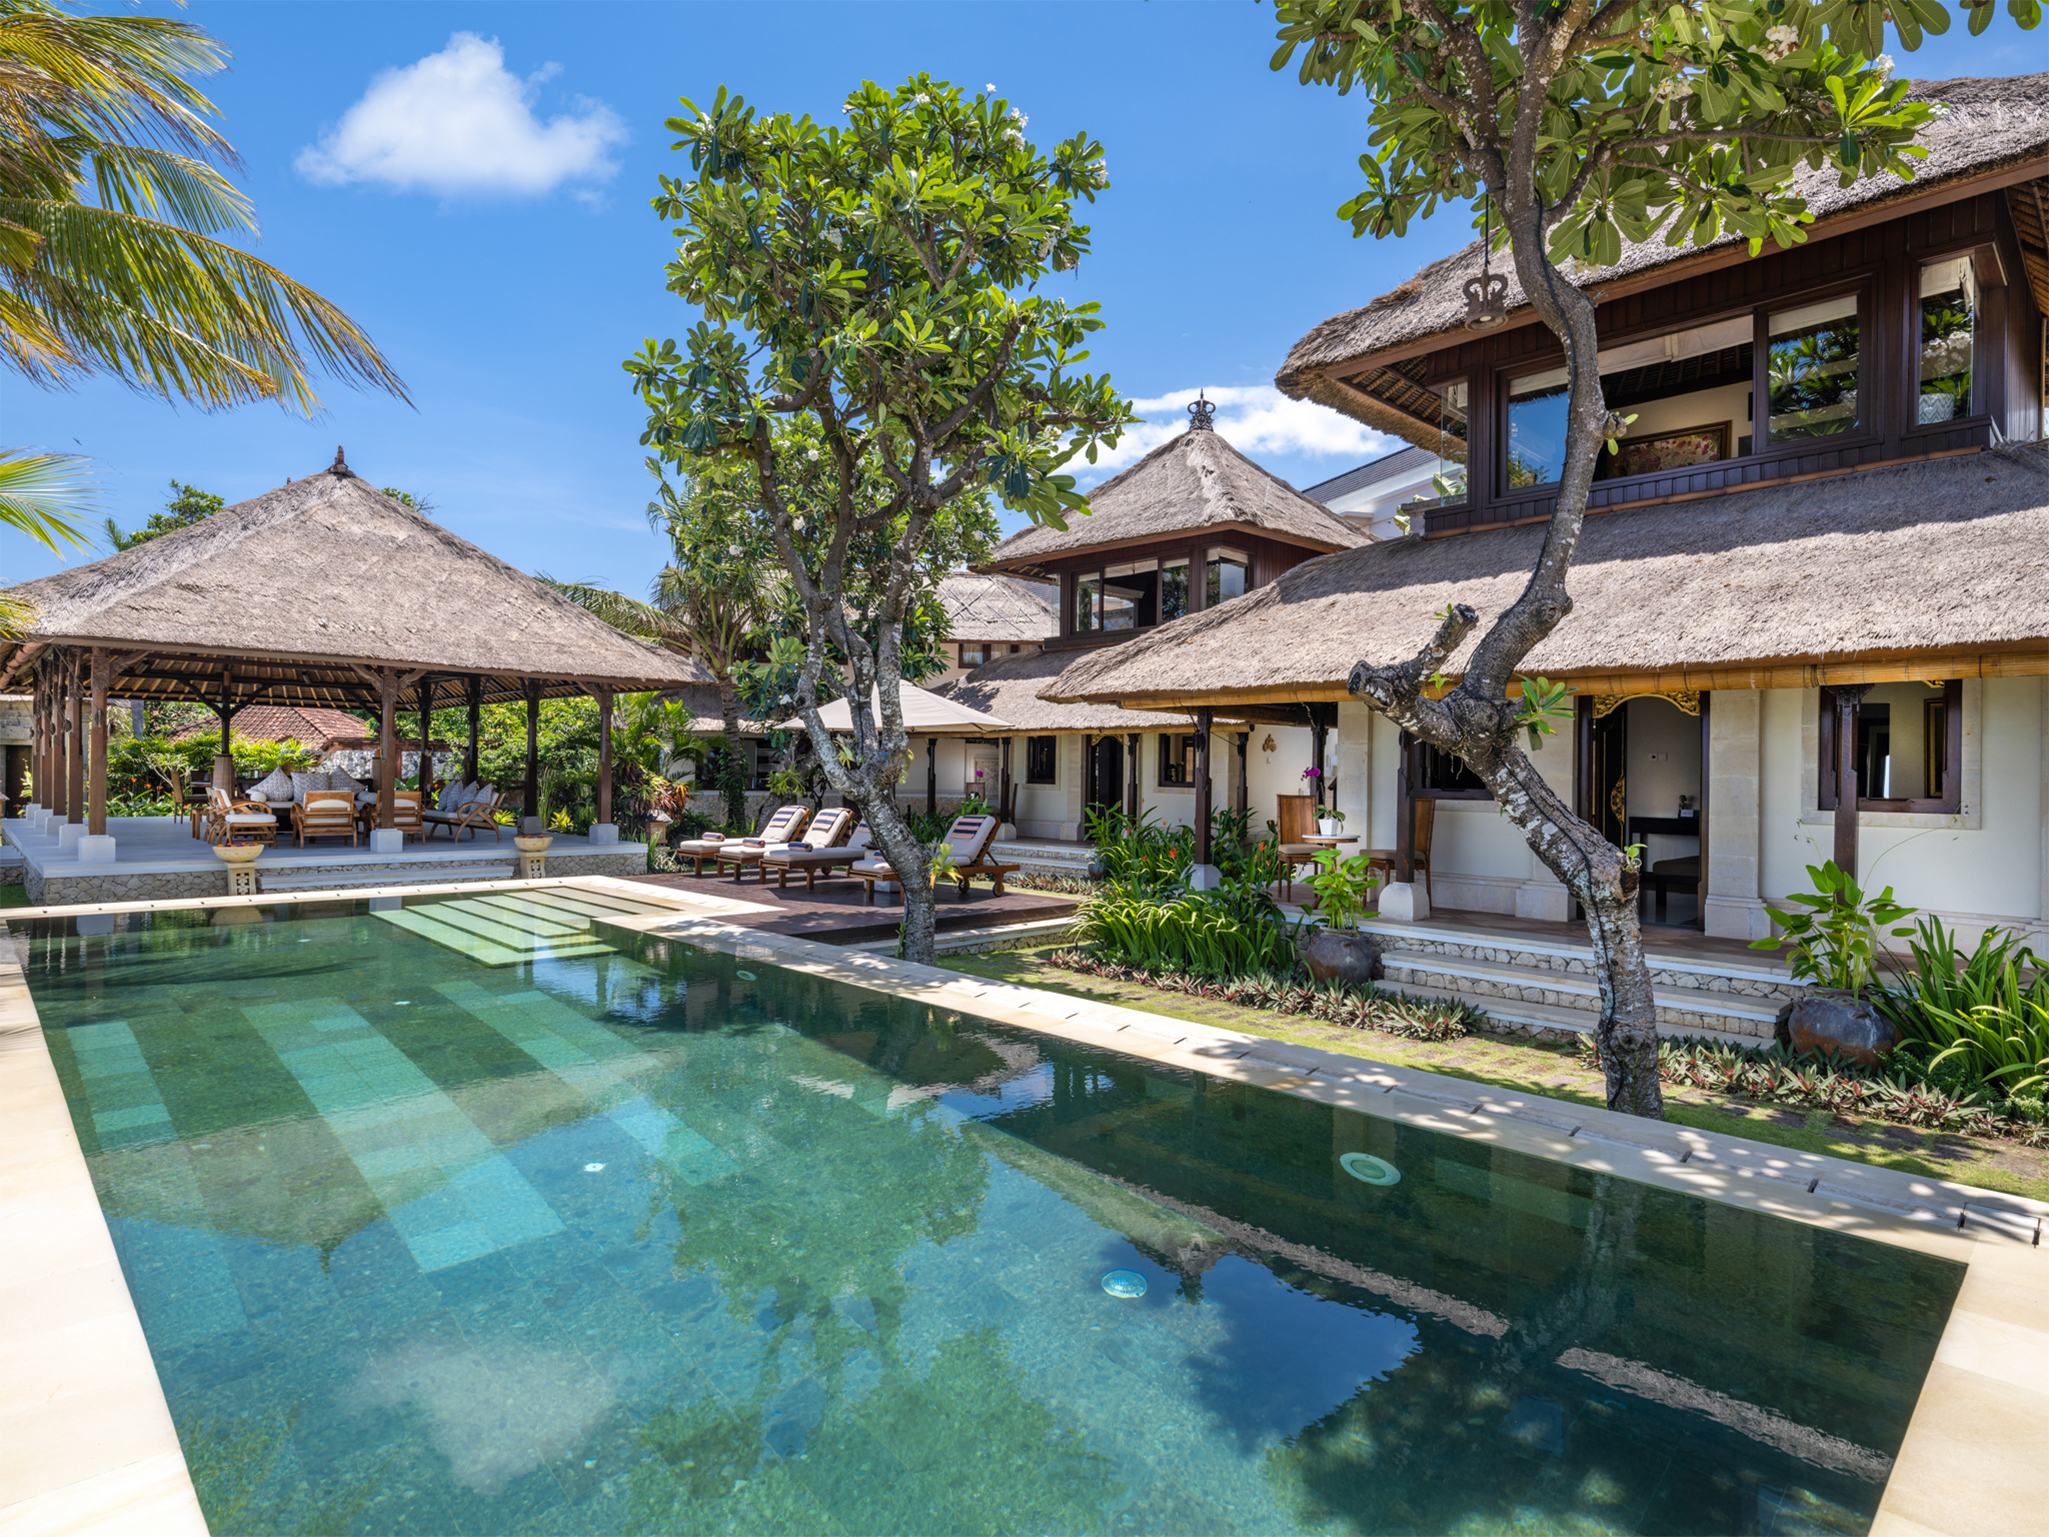 Villa Cemara - View of villa from pool - Villa Cemara, Sanur, Bali